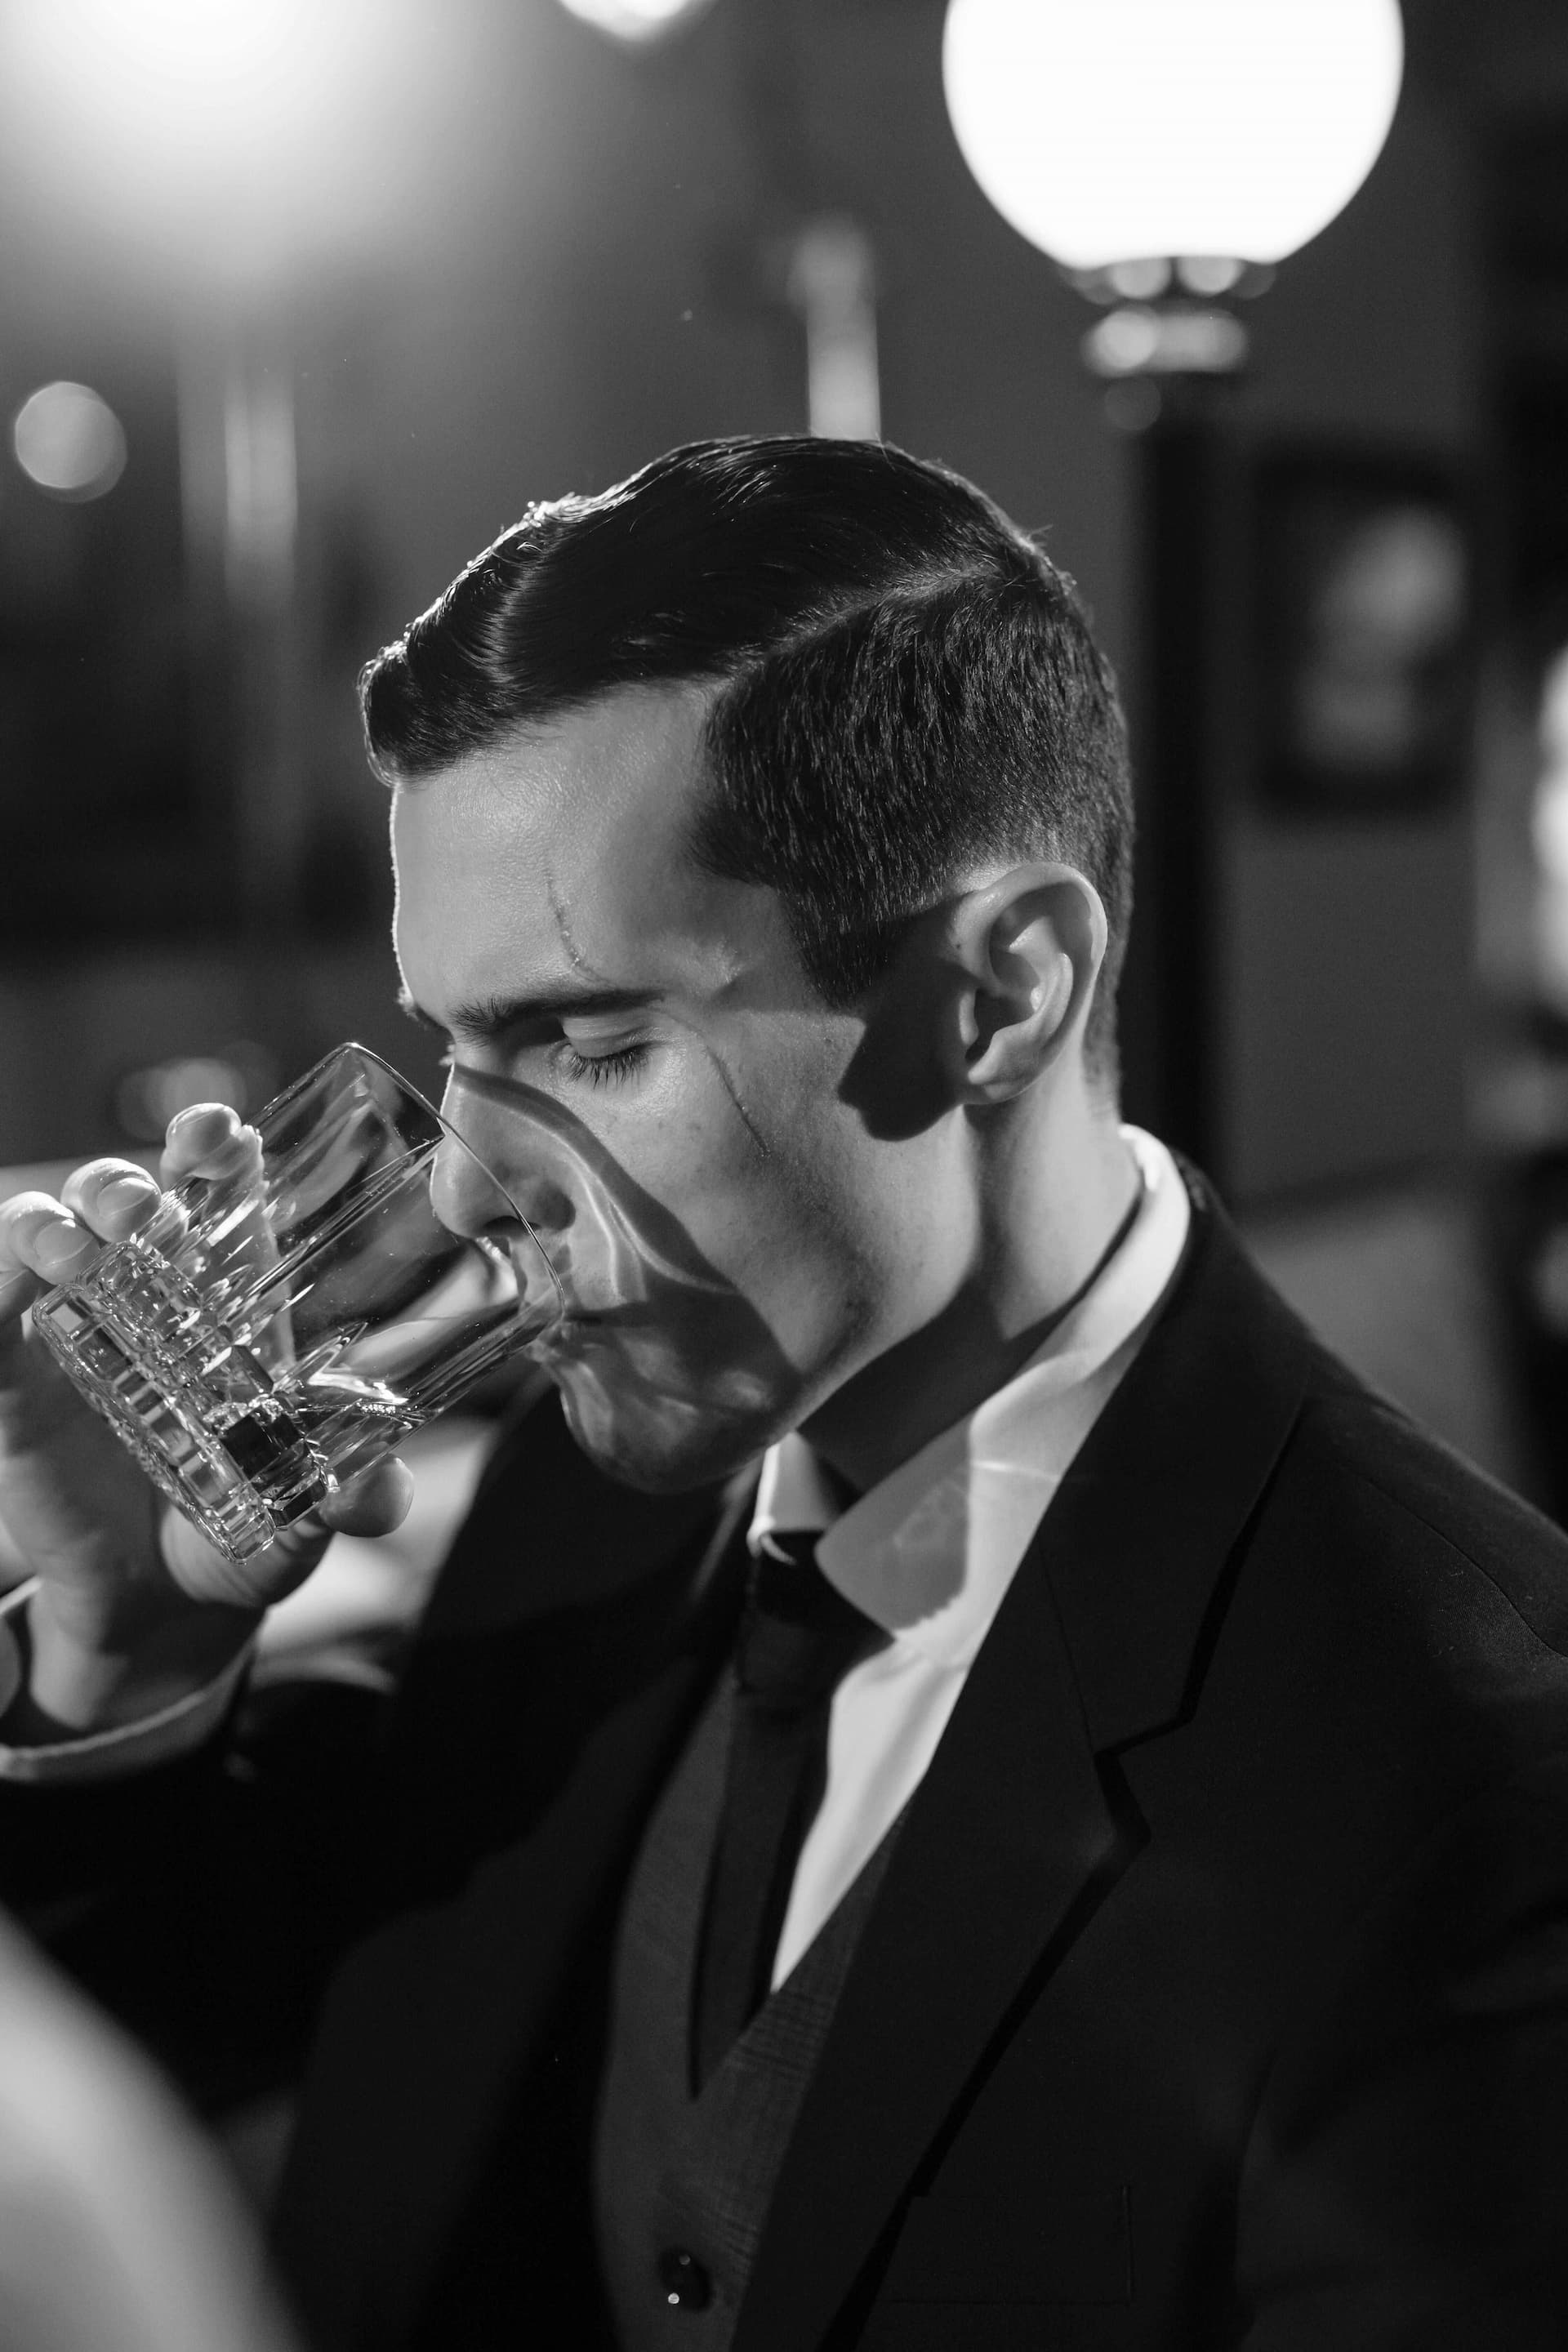 Newer Manners, Art of Conversation: An Updated Gentleman’s Guide To Drinking Etiquette